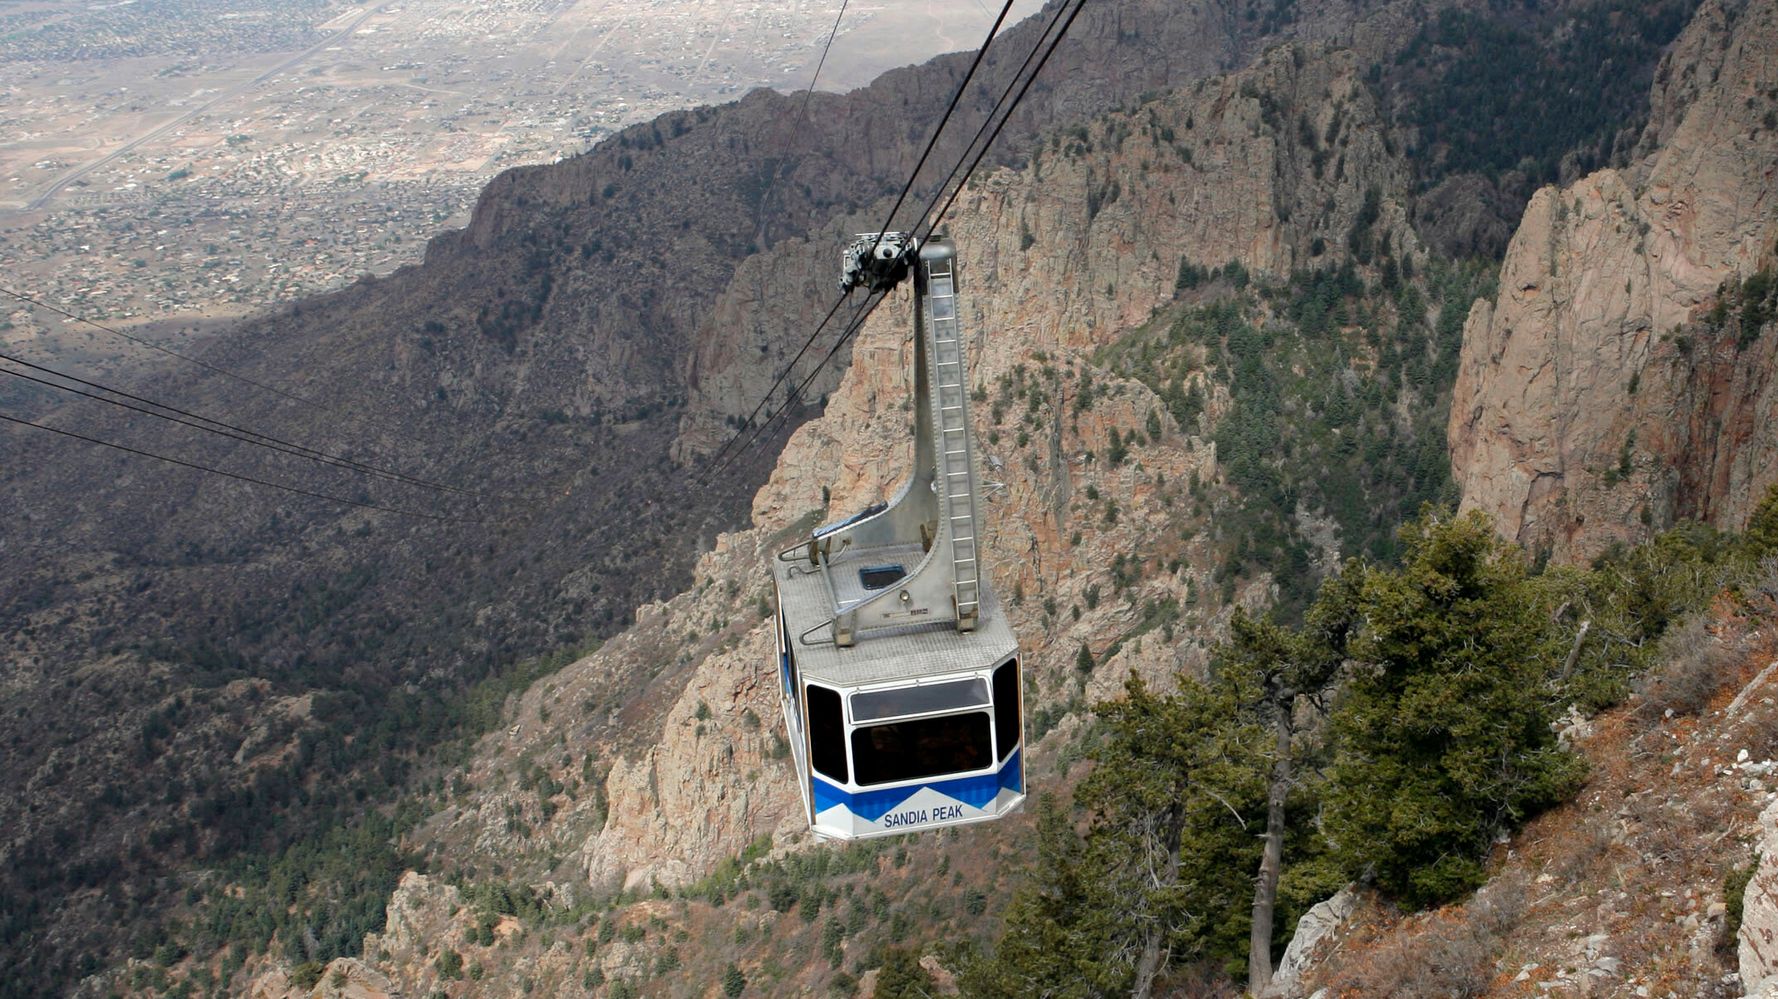 Sandia Peak tramway officials address tramway incident 